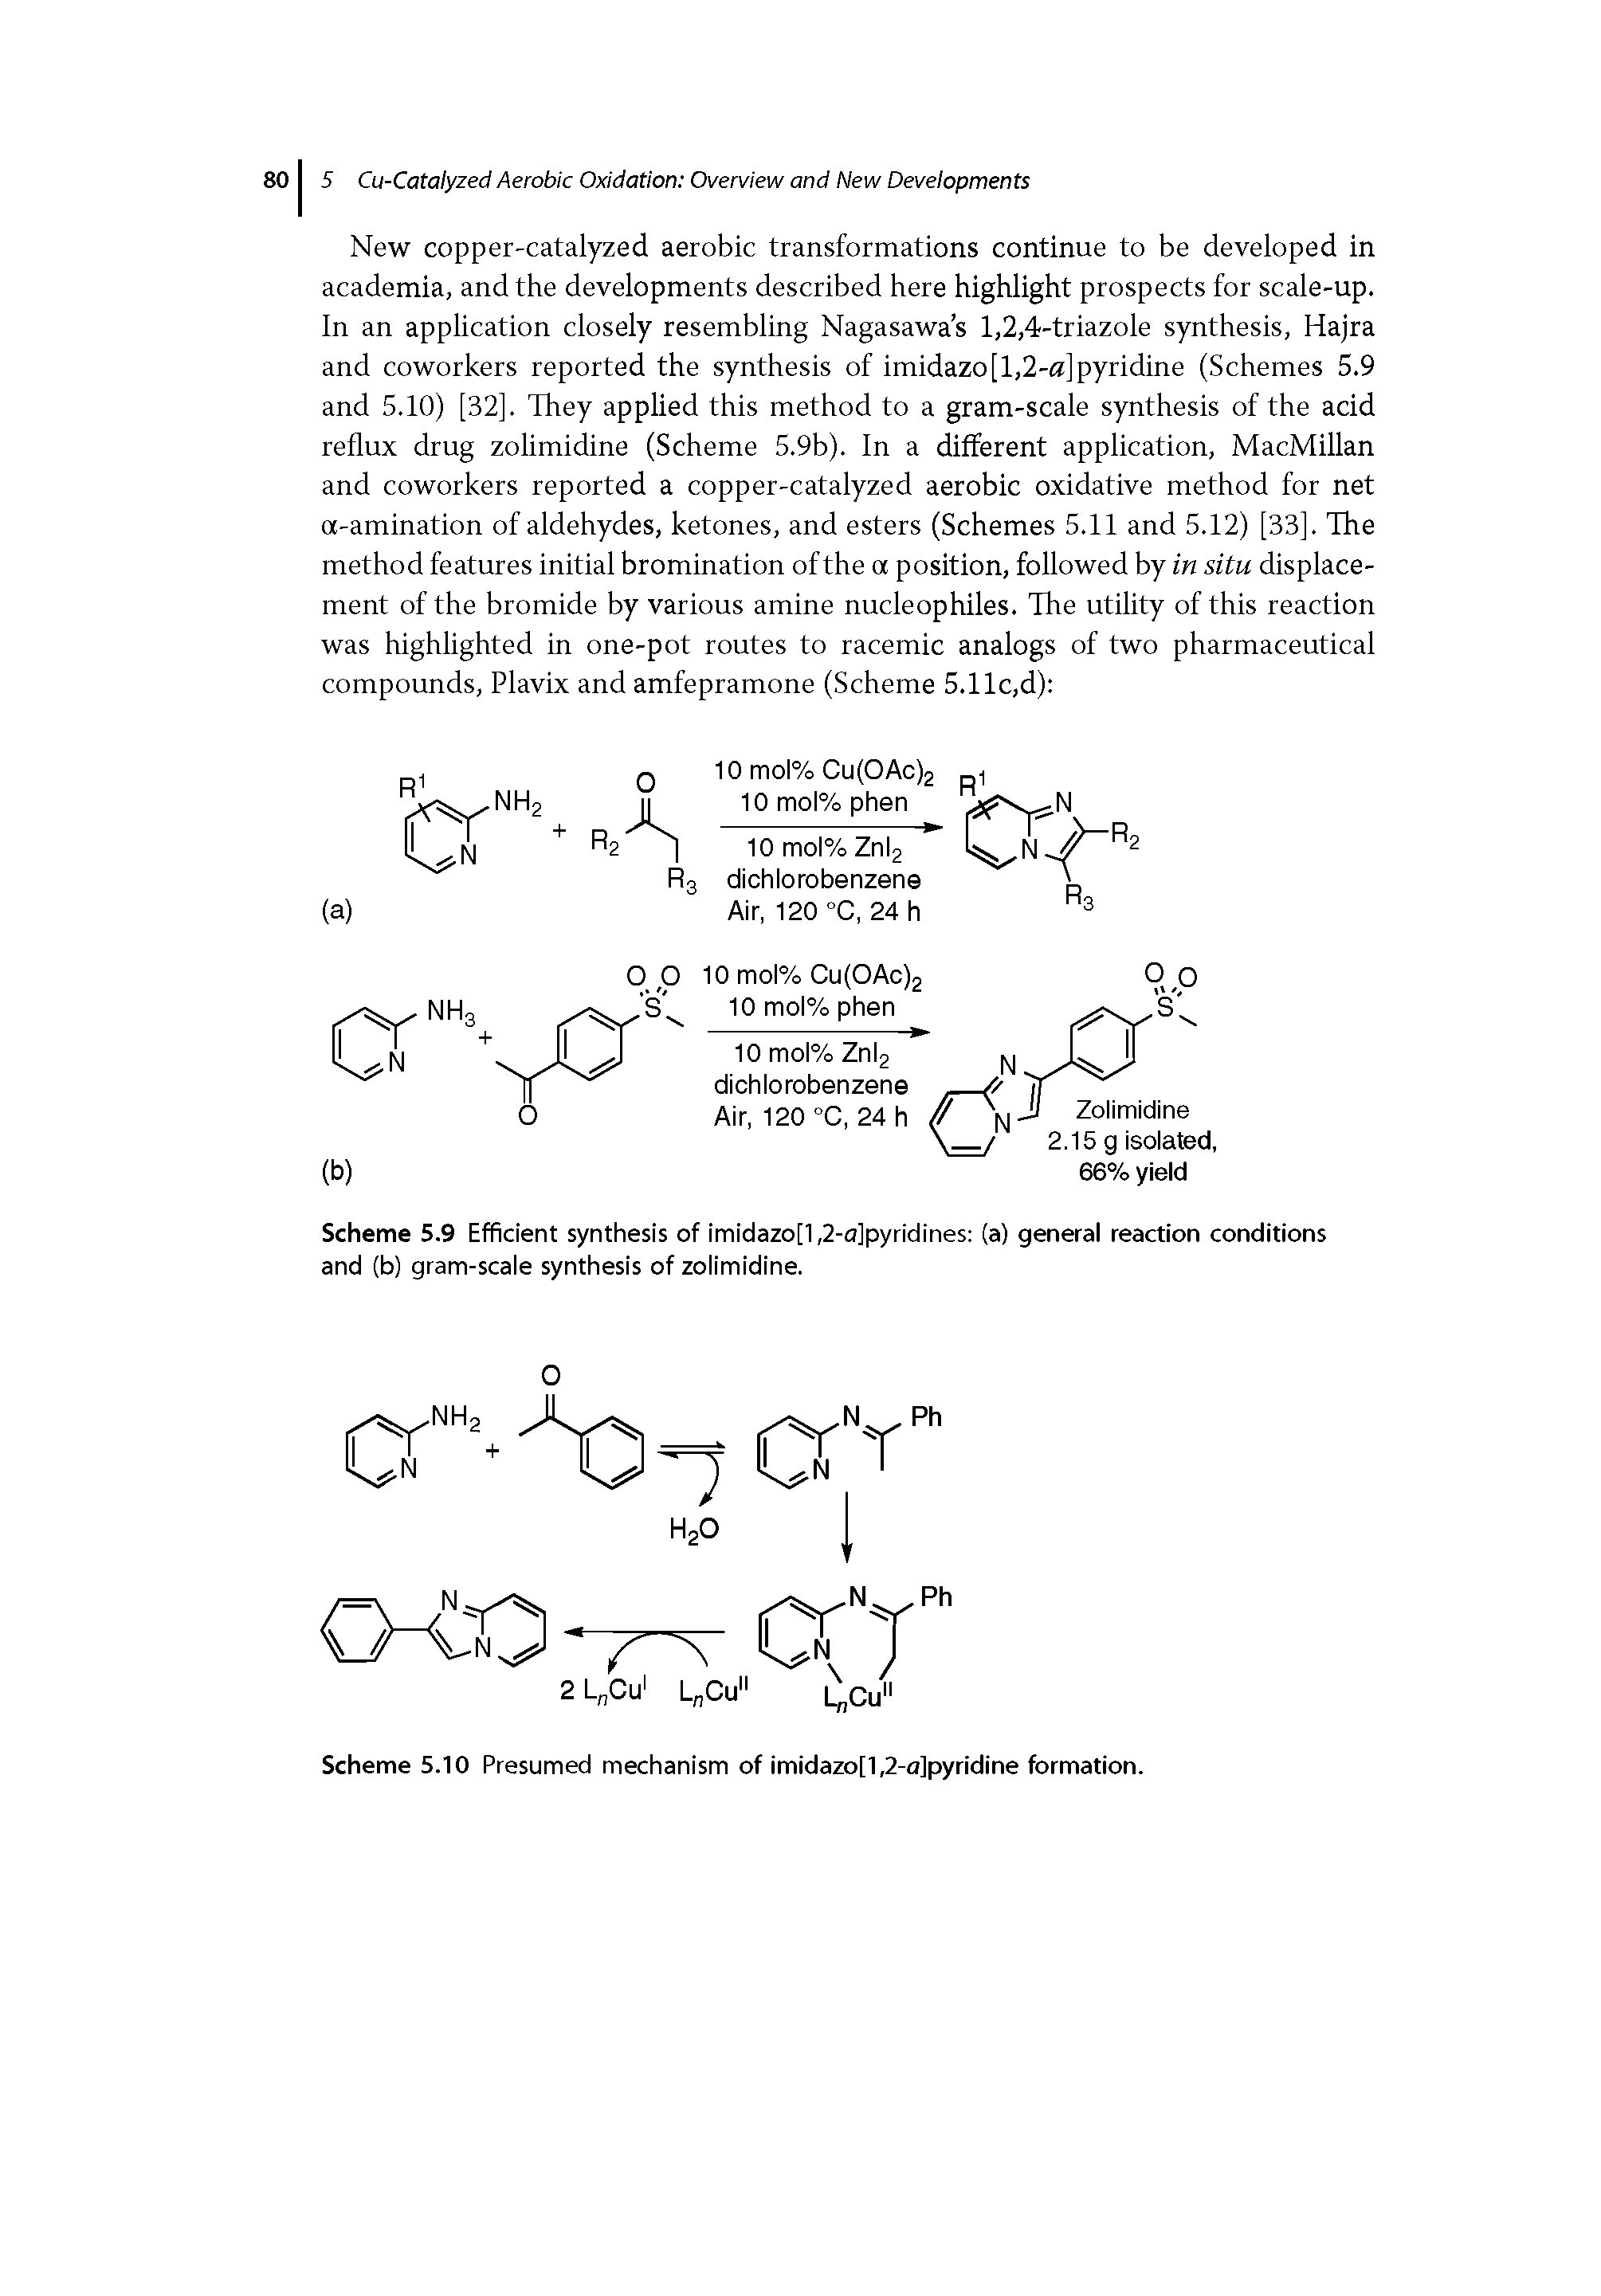 Scheme 5.10 Presumed mechanism of imidazo[1,2-a]pyridine formation.